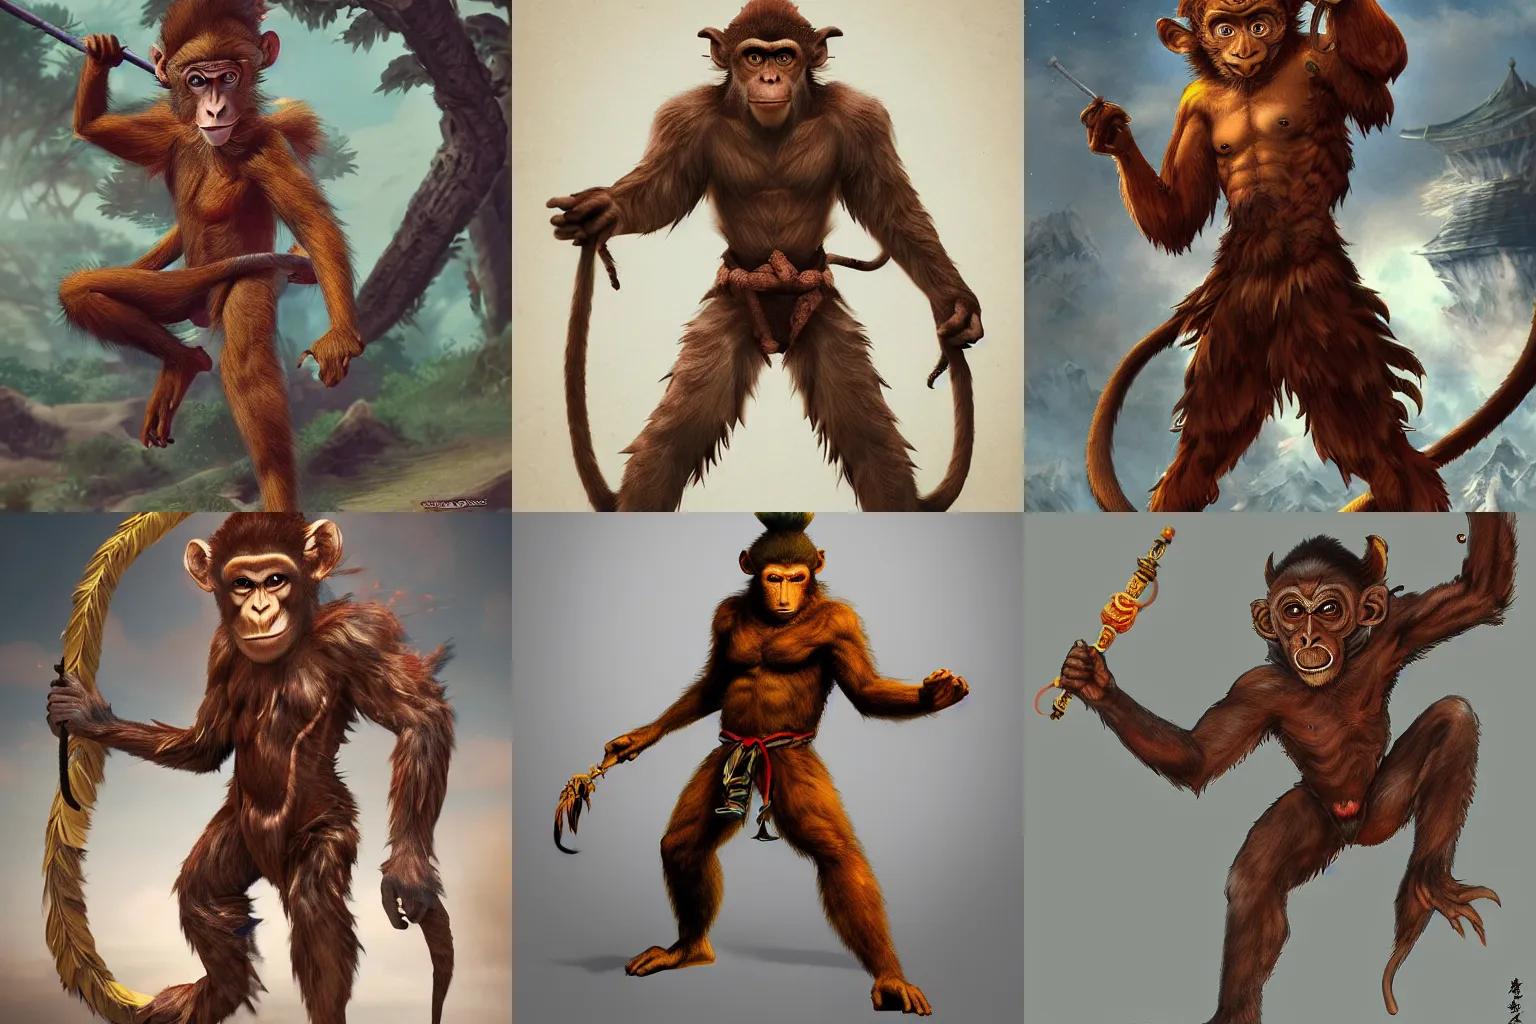 Prompt: tang mo, vastayan,Vanara , apeling, monkey folk, beast folk, humanoid monkey fantasy race ,wukong, monkey king, featured on artstation